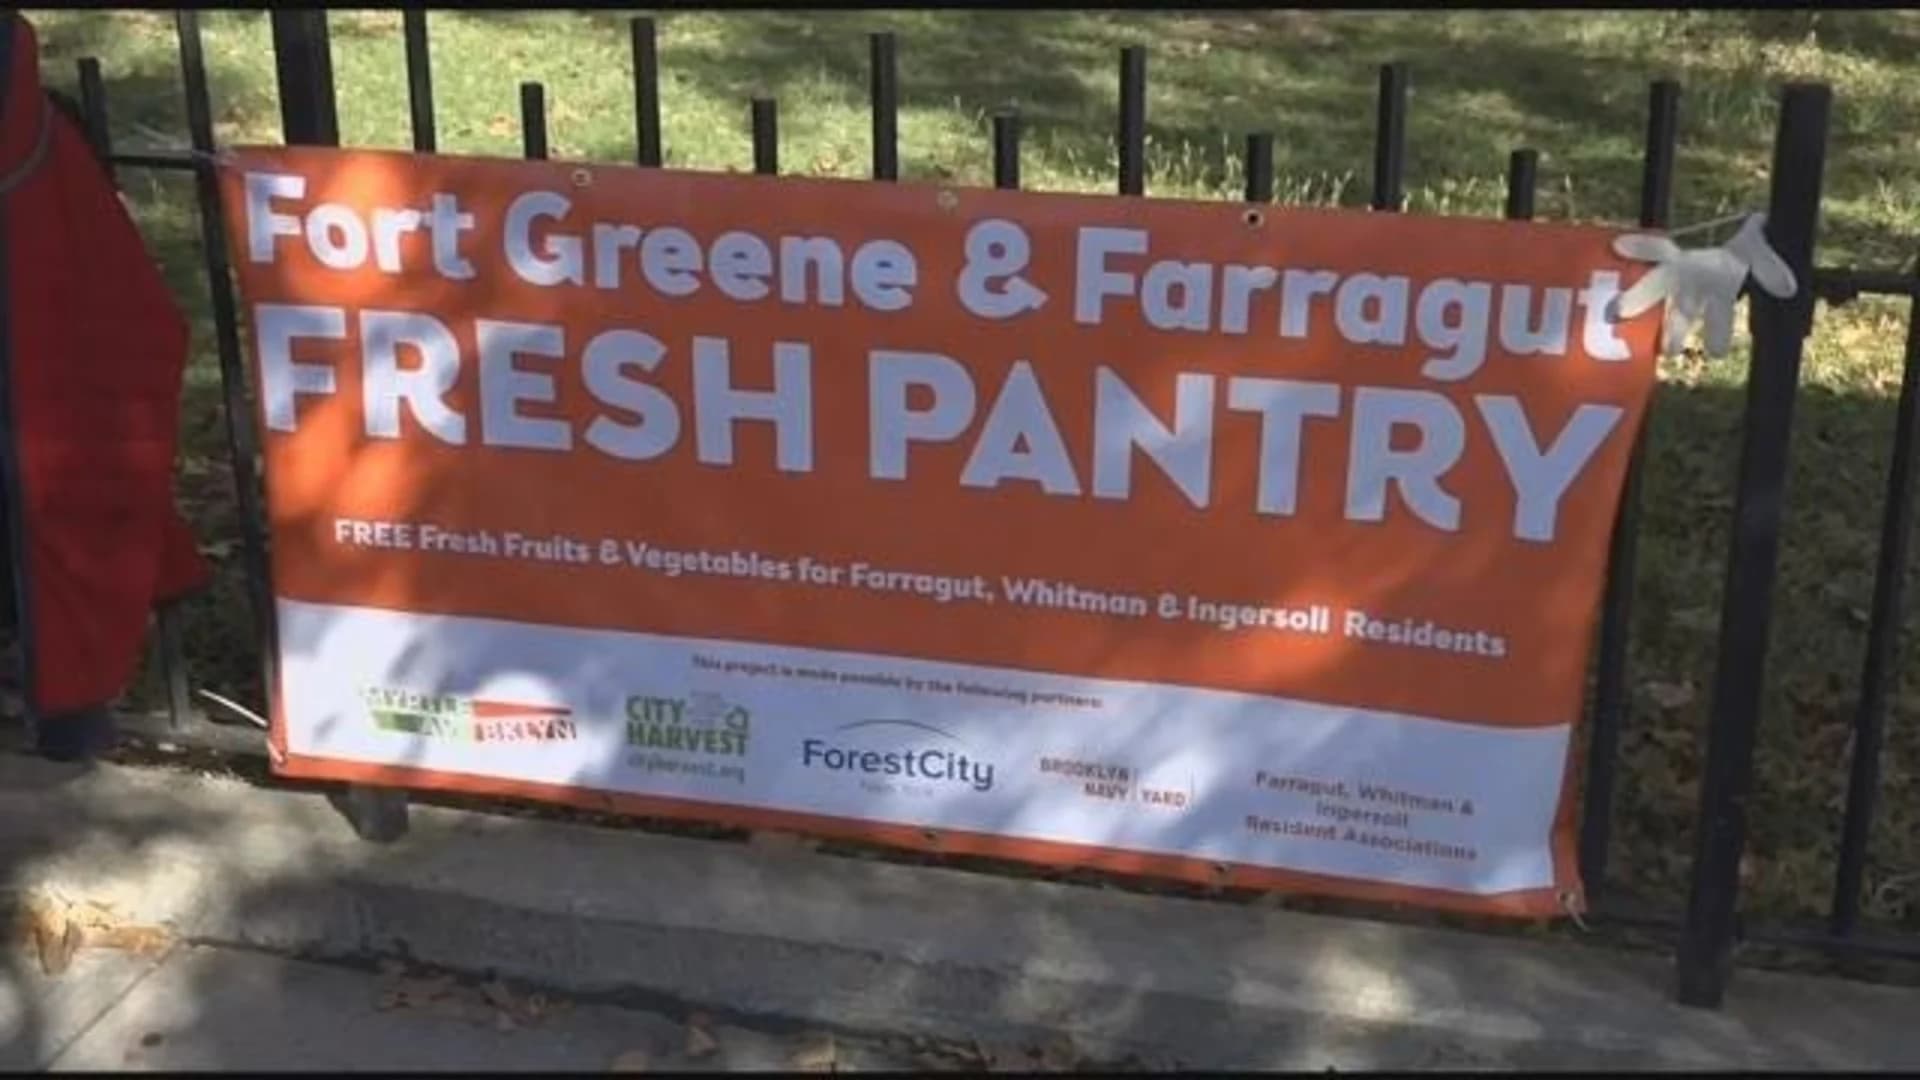 Food pantry celebrates 2 years of supplying fresh produce to Fort Greene